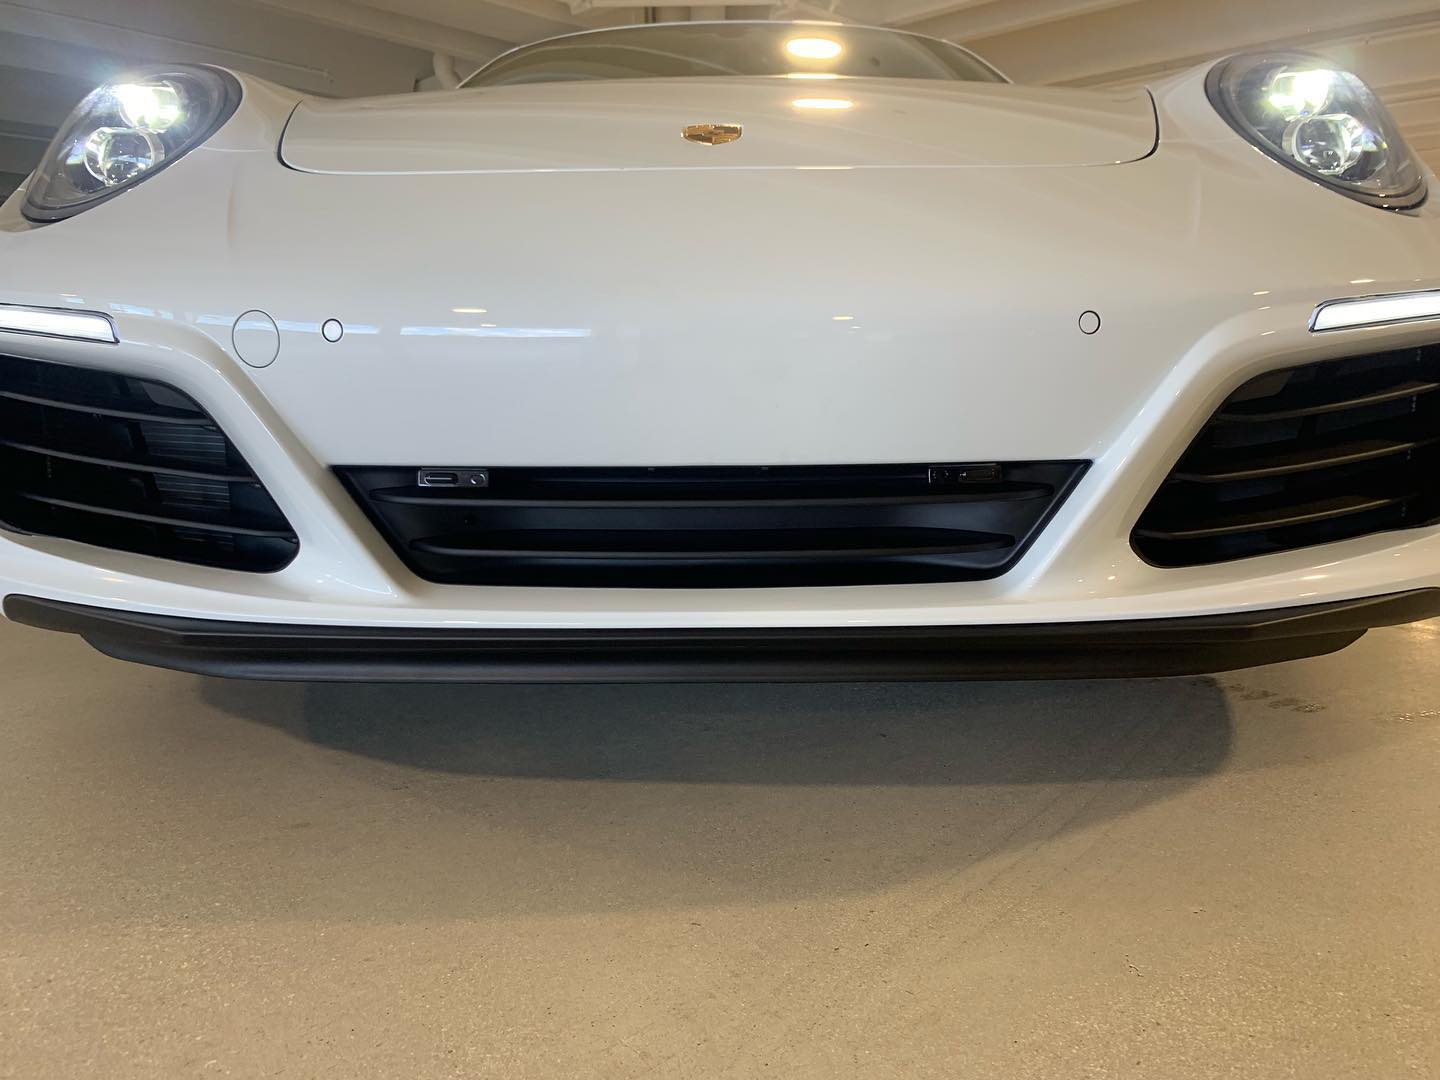 Custom K40 Police Laser Jammers and Hidden Radar Receiver Installed on New 2019 Porsche Carrera in Boca Raton, FL